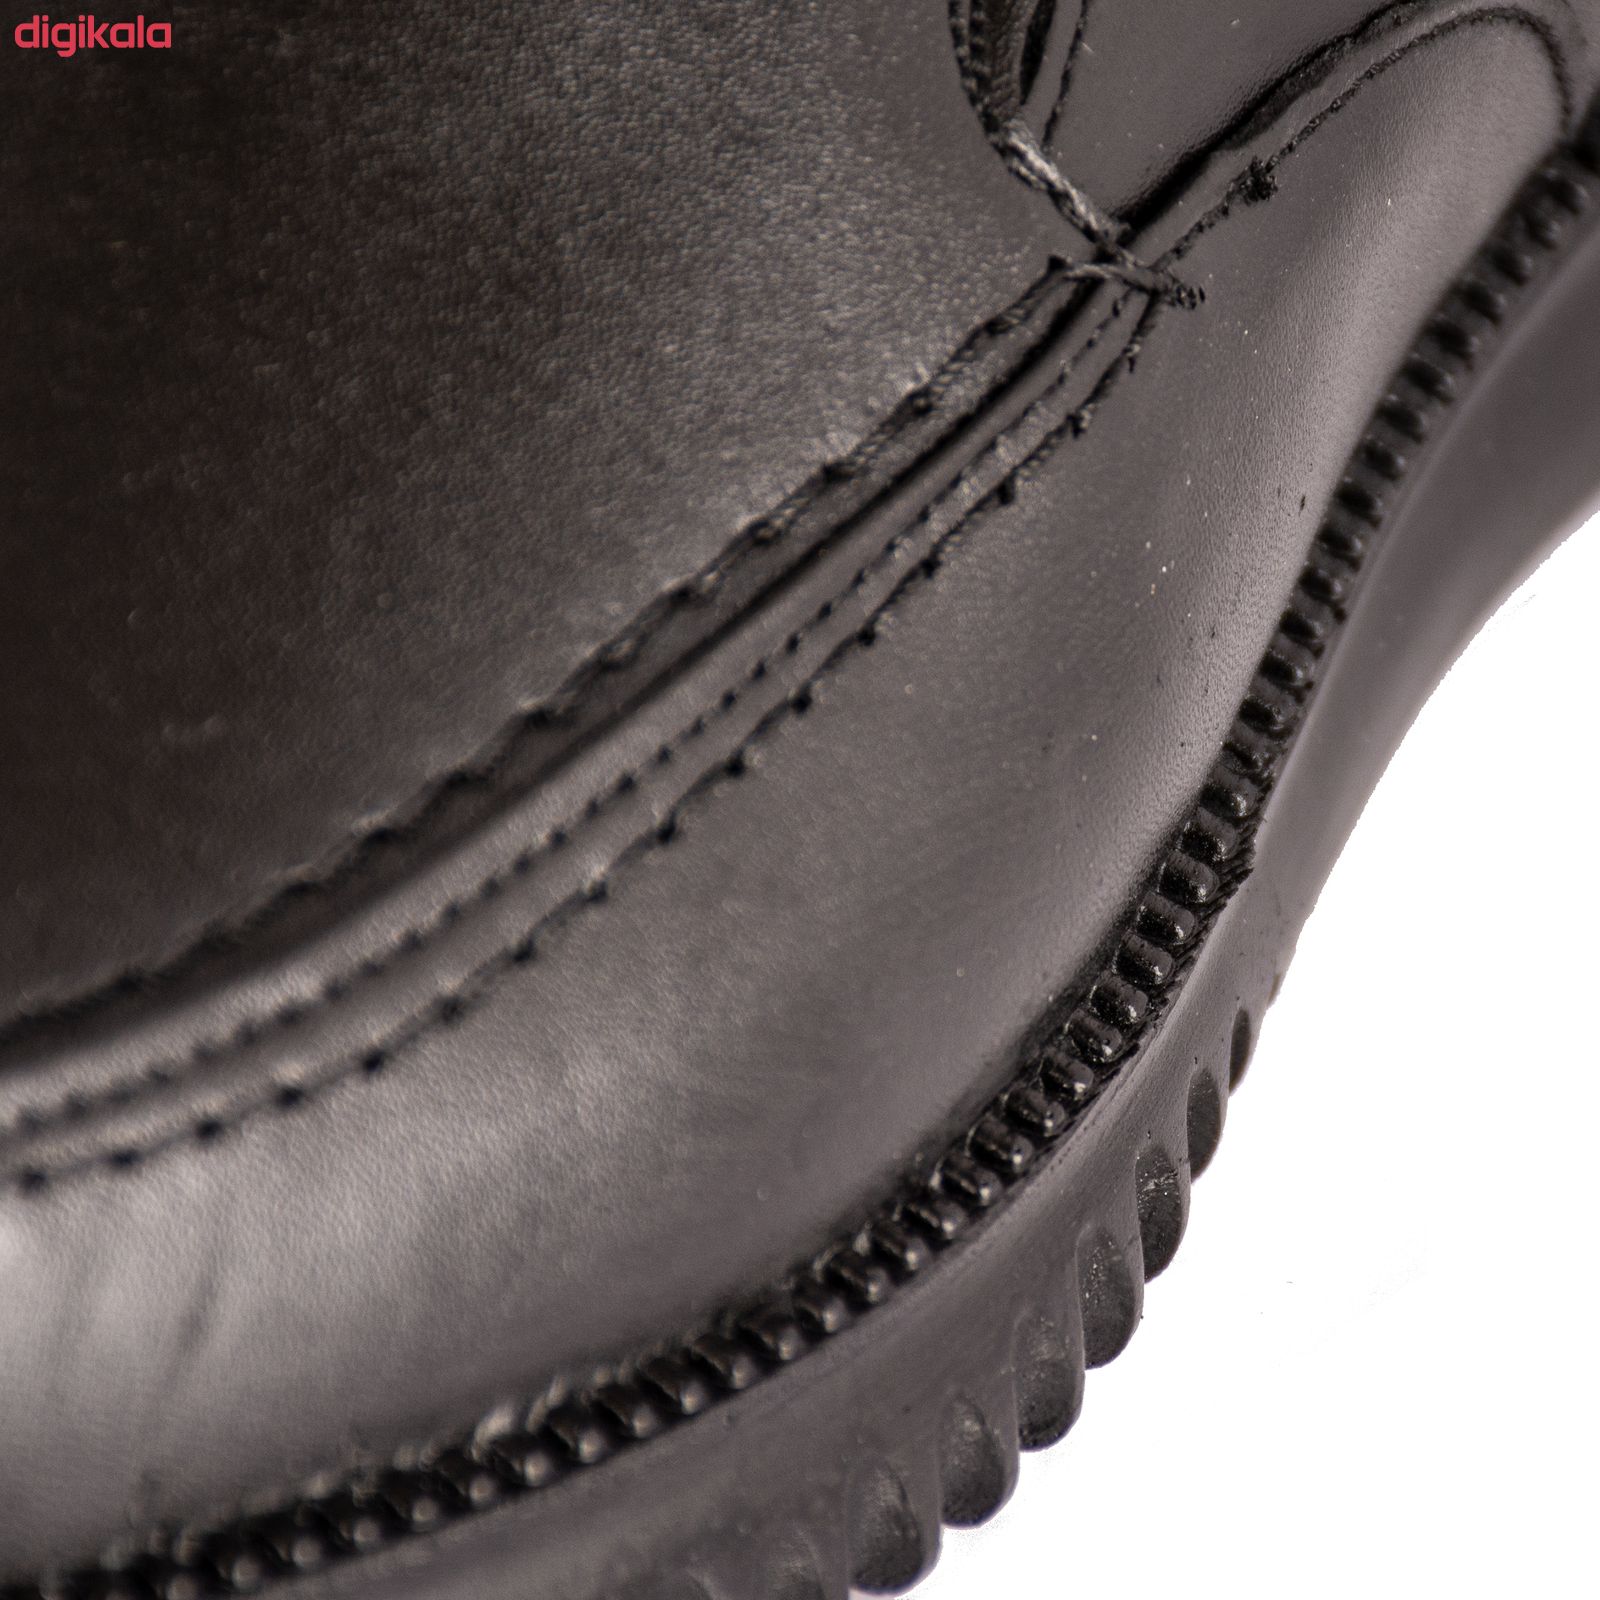 کفش روزمره مردانه مدل آریا کد Da-sh3001